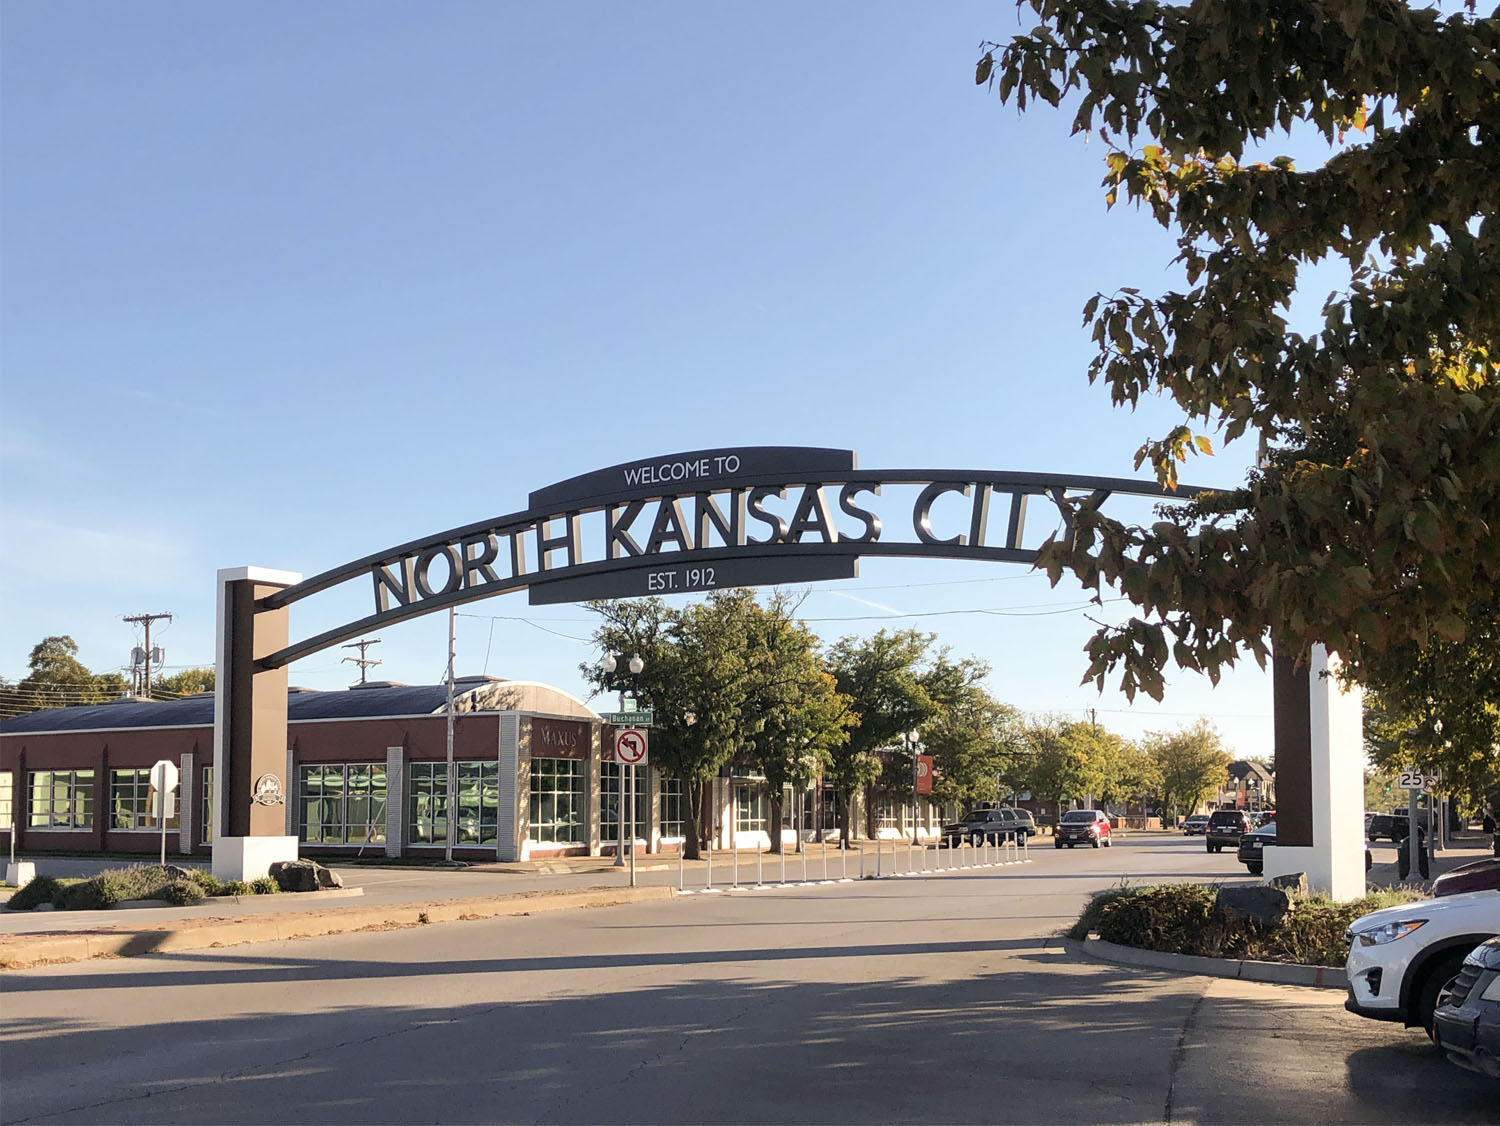 North Kansas City Gateway Arch